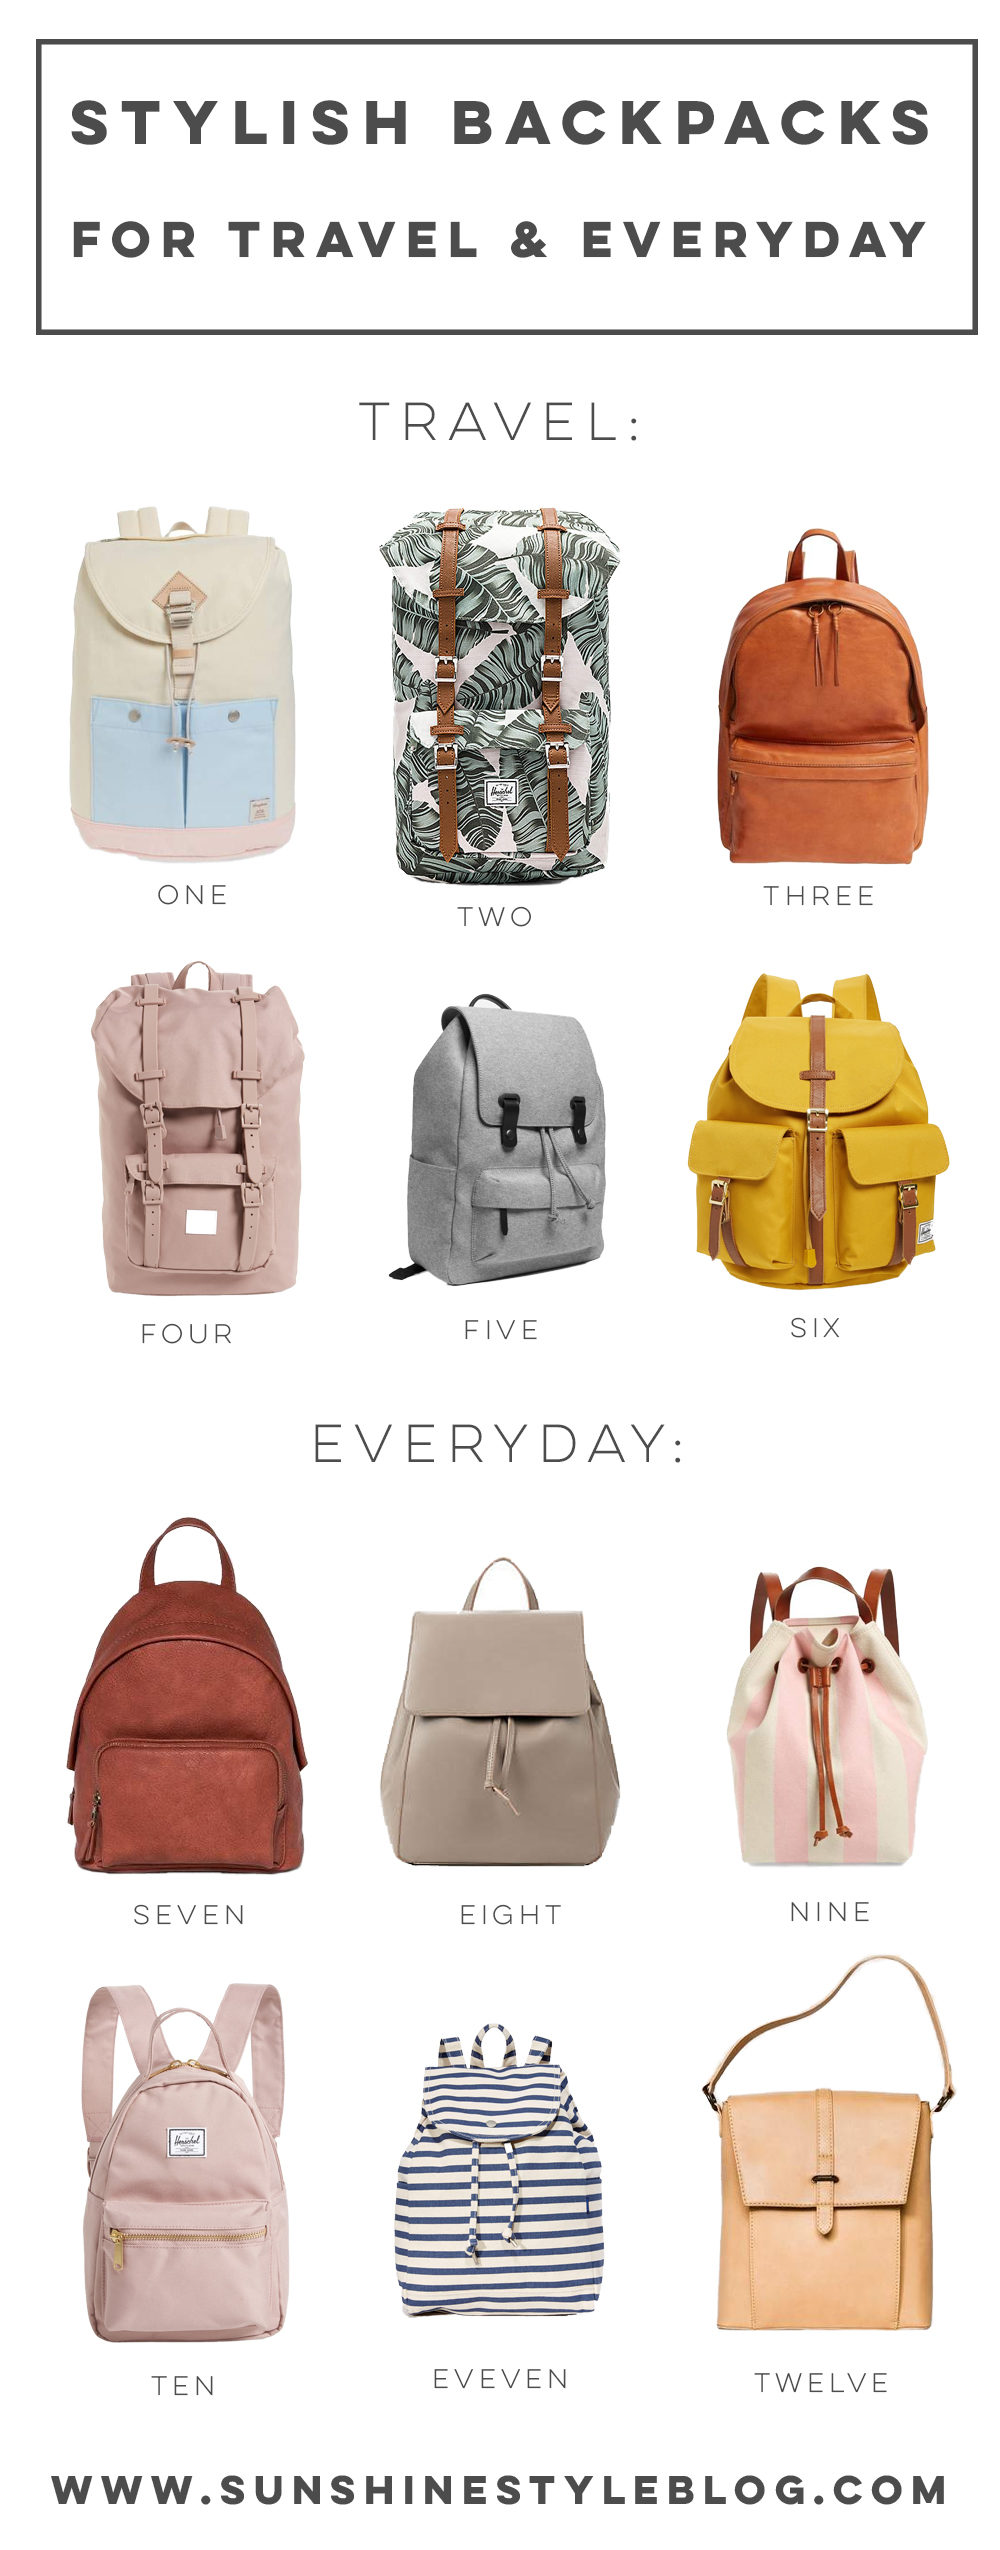 Proficiat Prooi kralen 12 Stylish Backpacks for Travel and Everyday - Sunshine Style